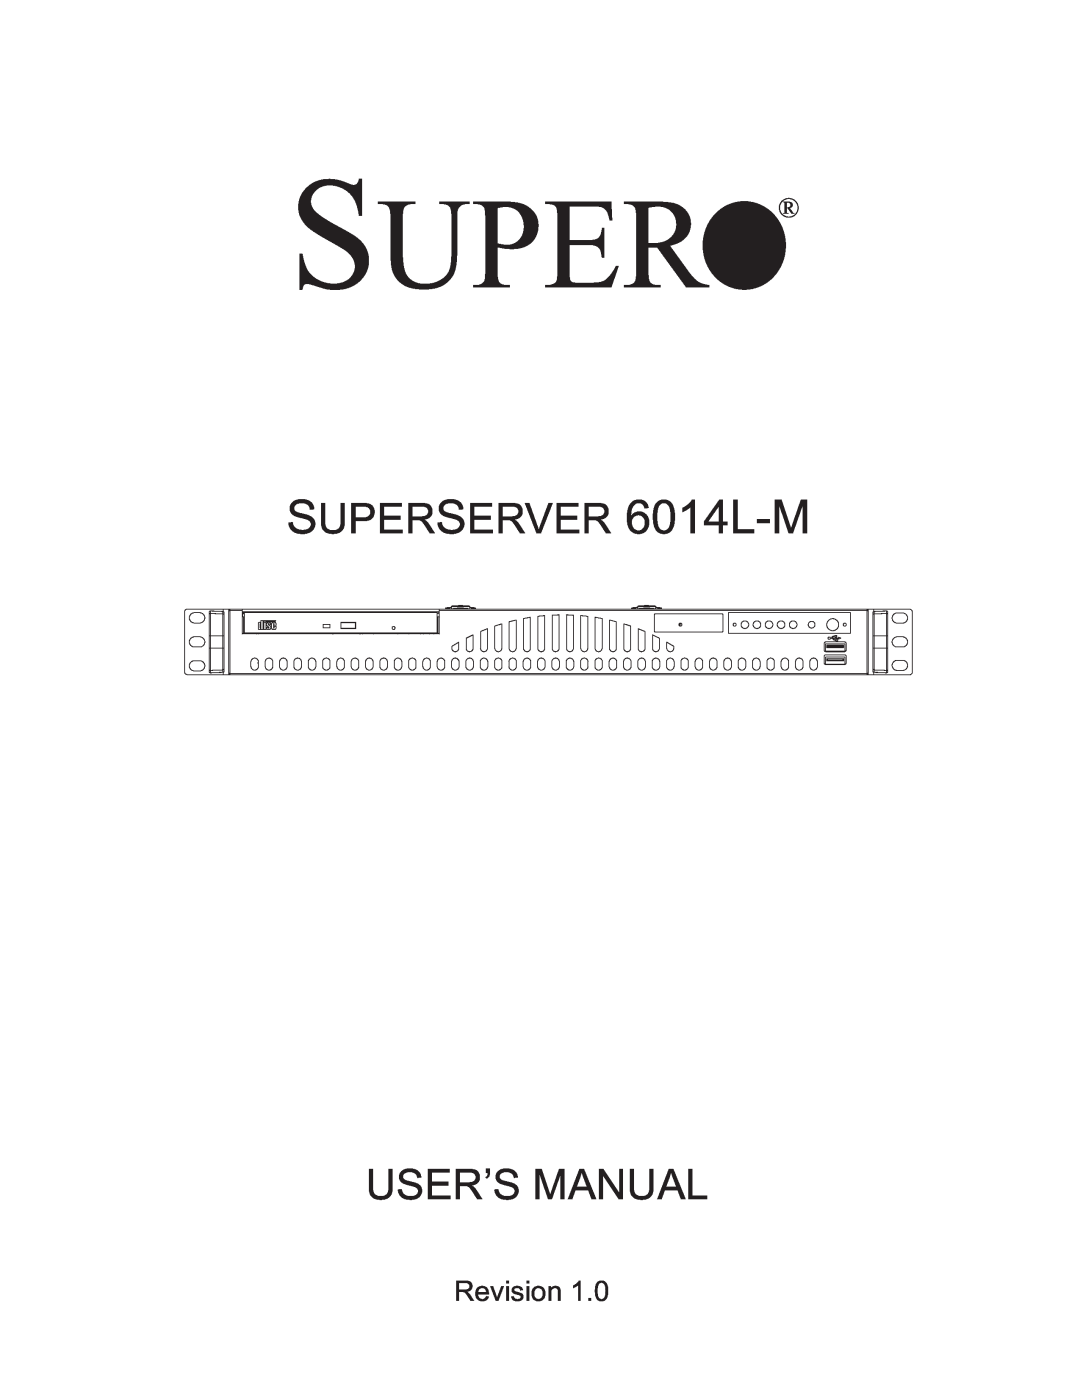 SUPER MICRO Computer manual Super, SUPERSERVER 6014L-M USER’S MANUAL, Revision 